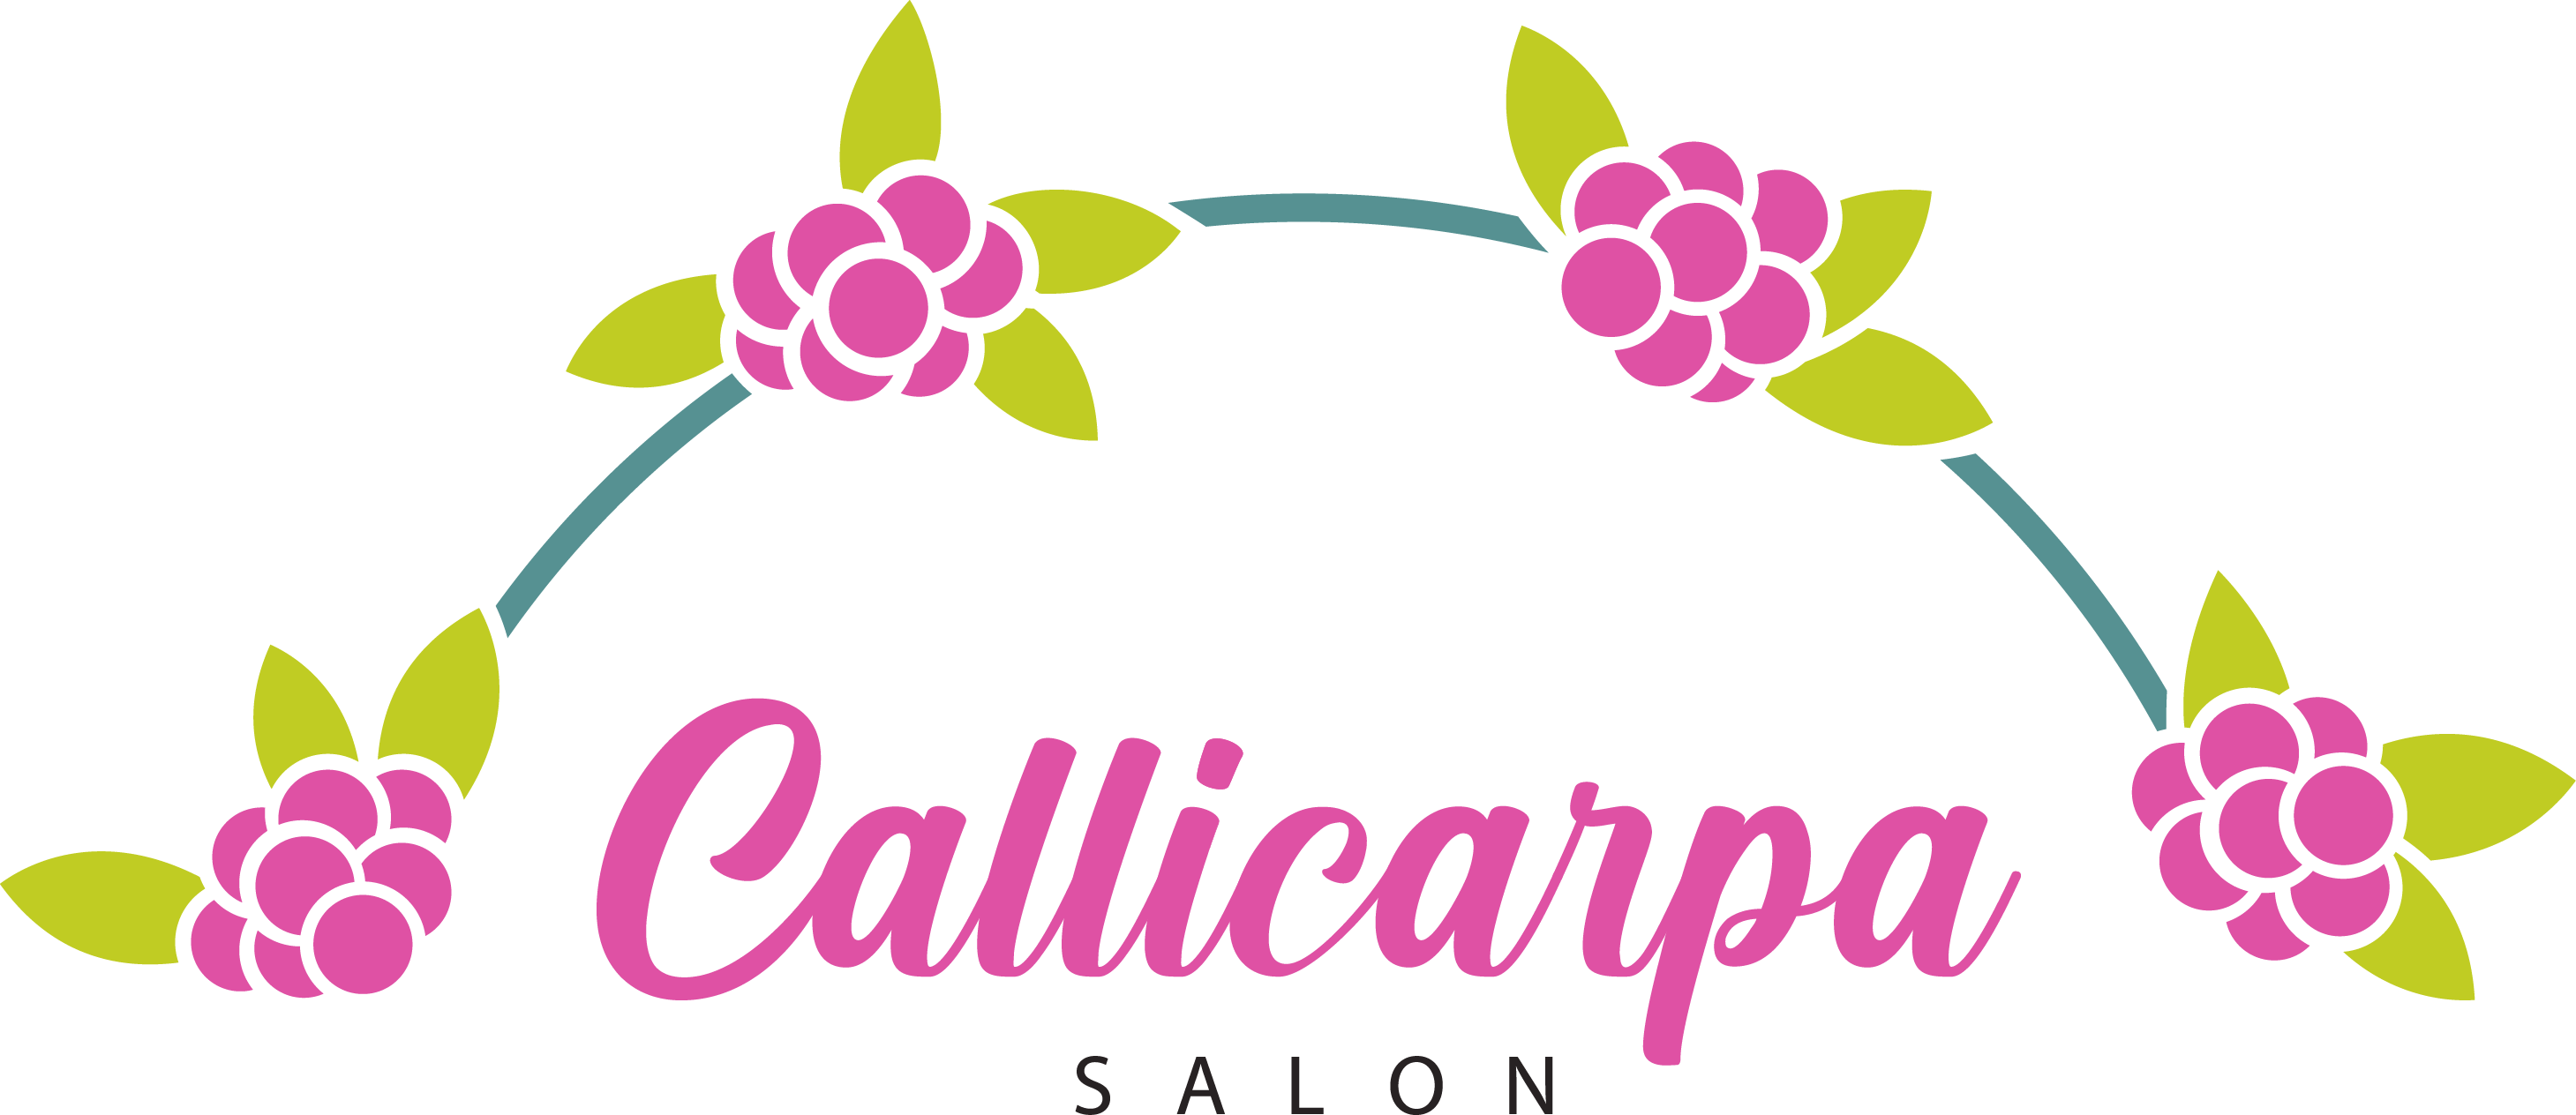 Logo callicarpa